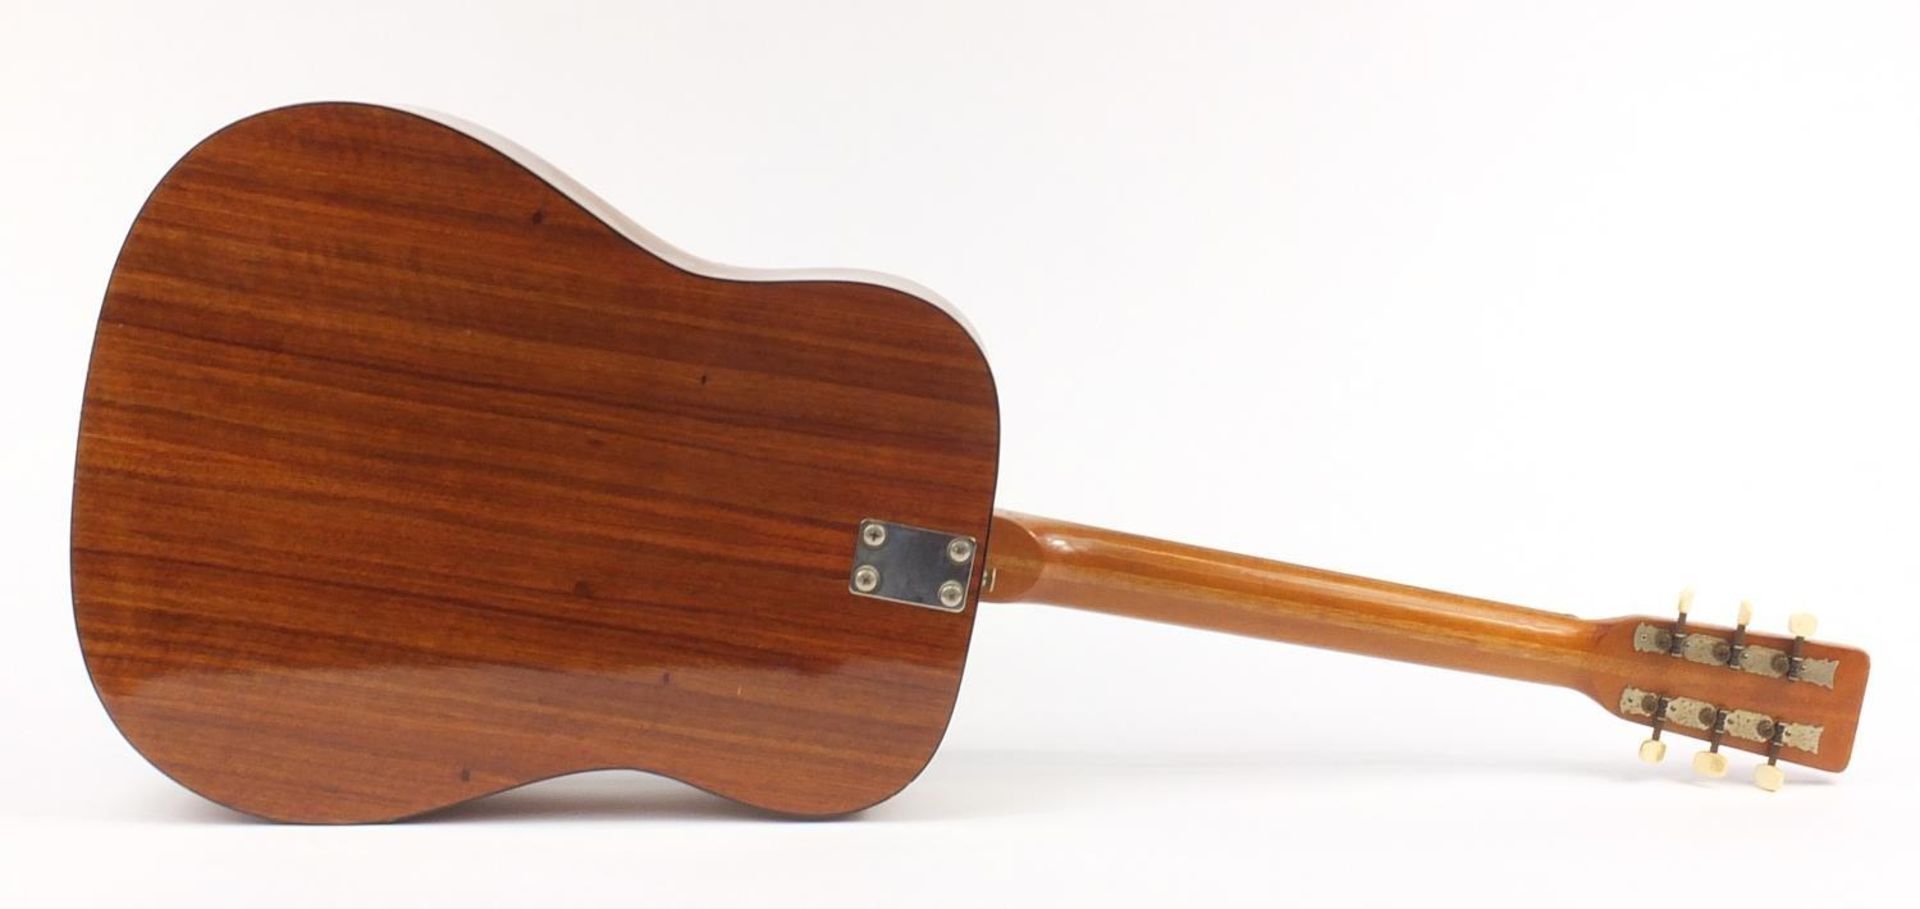 Italian six string acoustic guitar model KD28/D, 105cm in length - Image 3 of 4